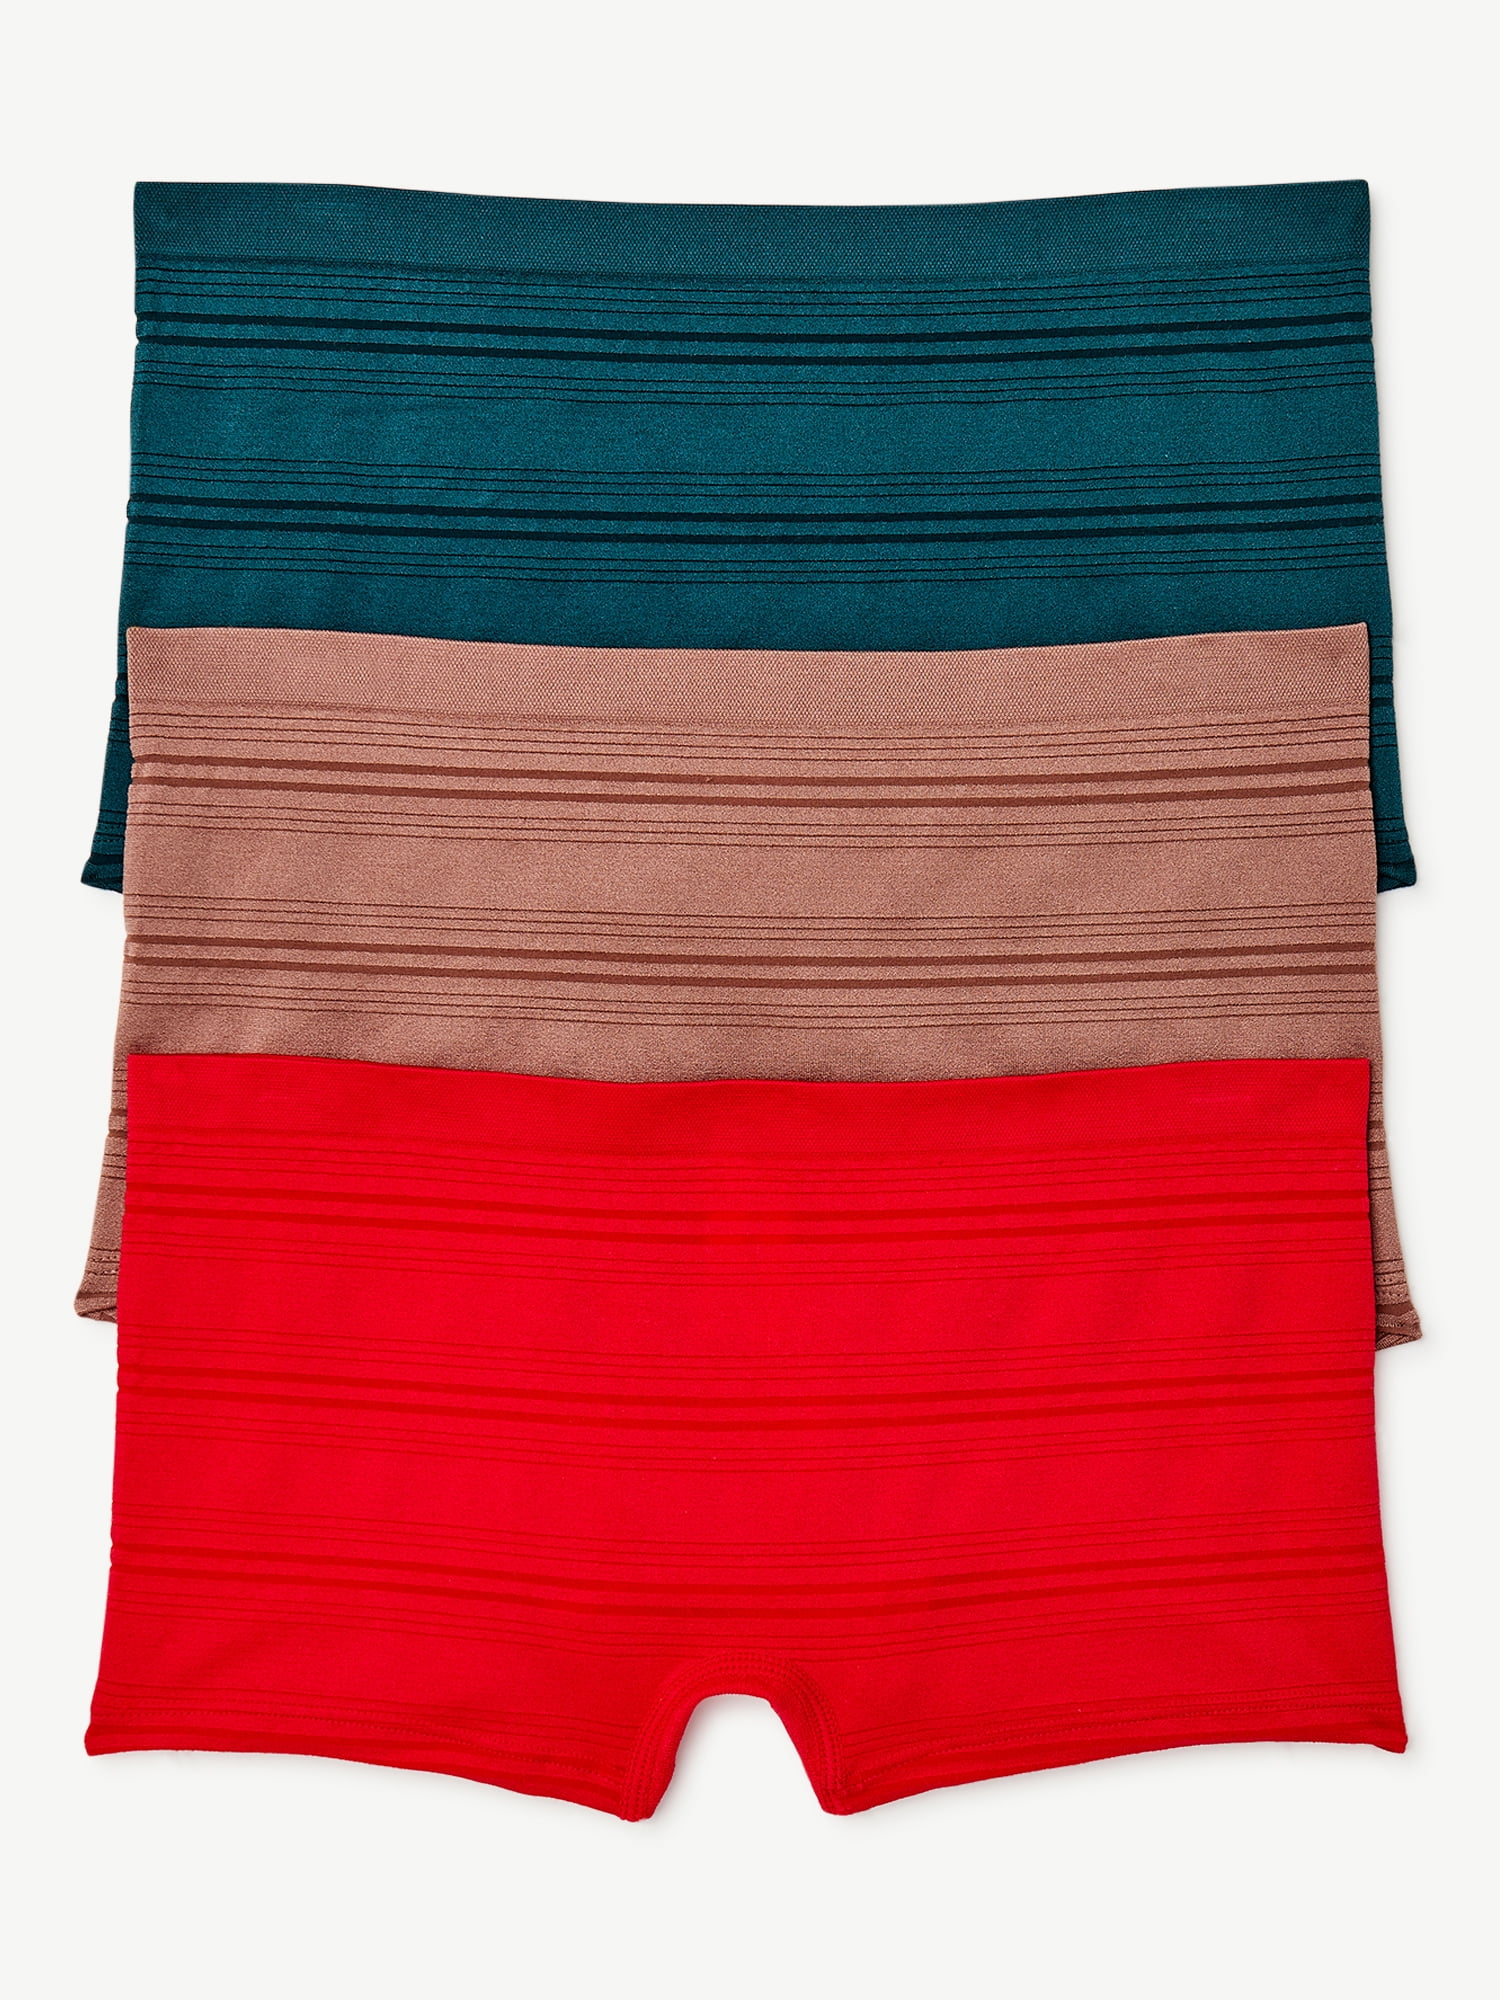 Joyspun Women's Sheer Stripe Seamless Boyshort Panties, 3-Pack